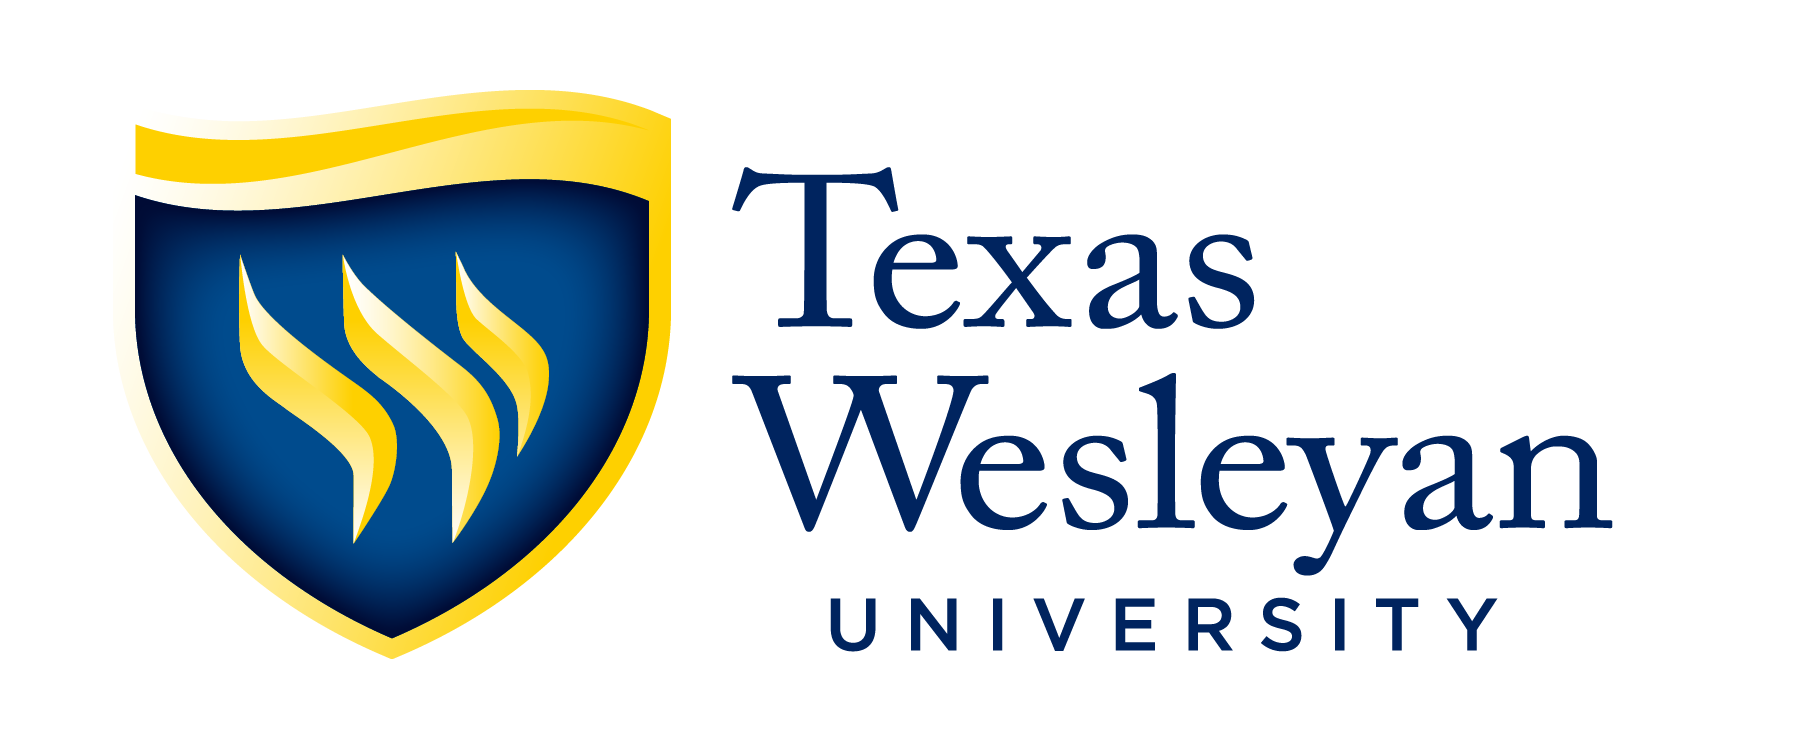 Logos & Digital Templates - Texas Wesleyan University